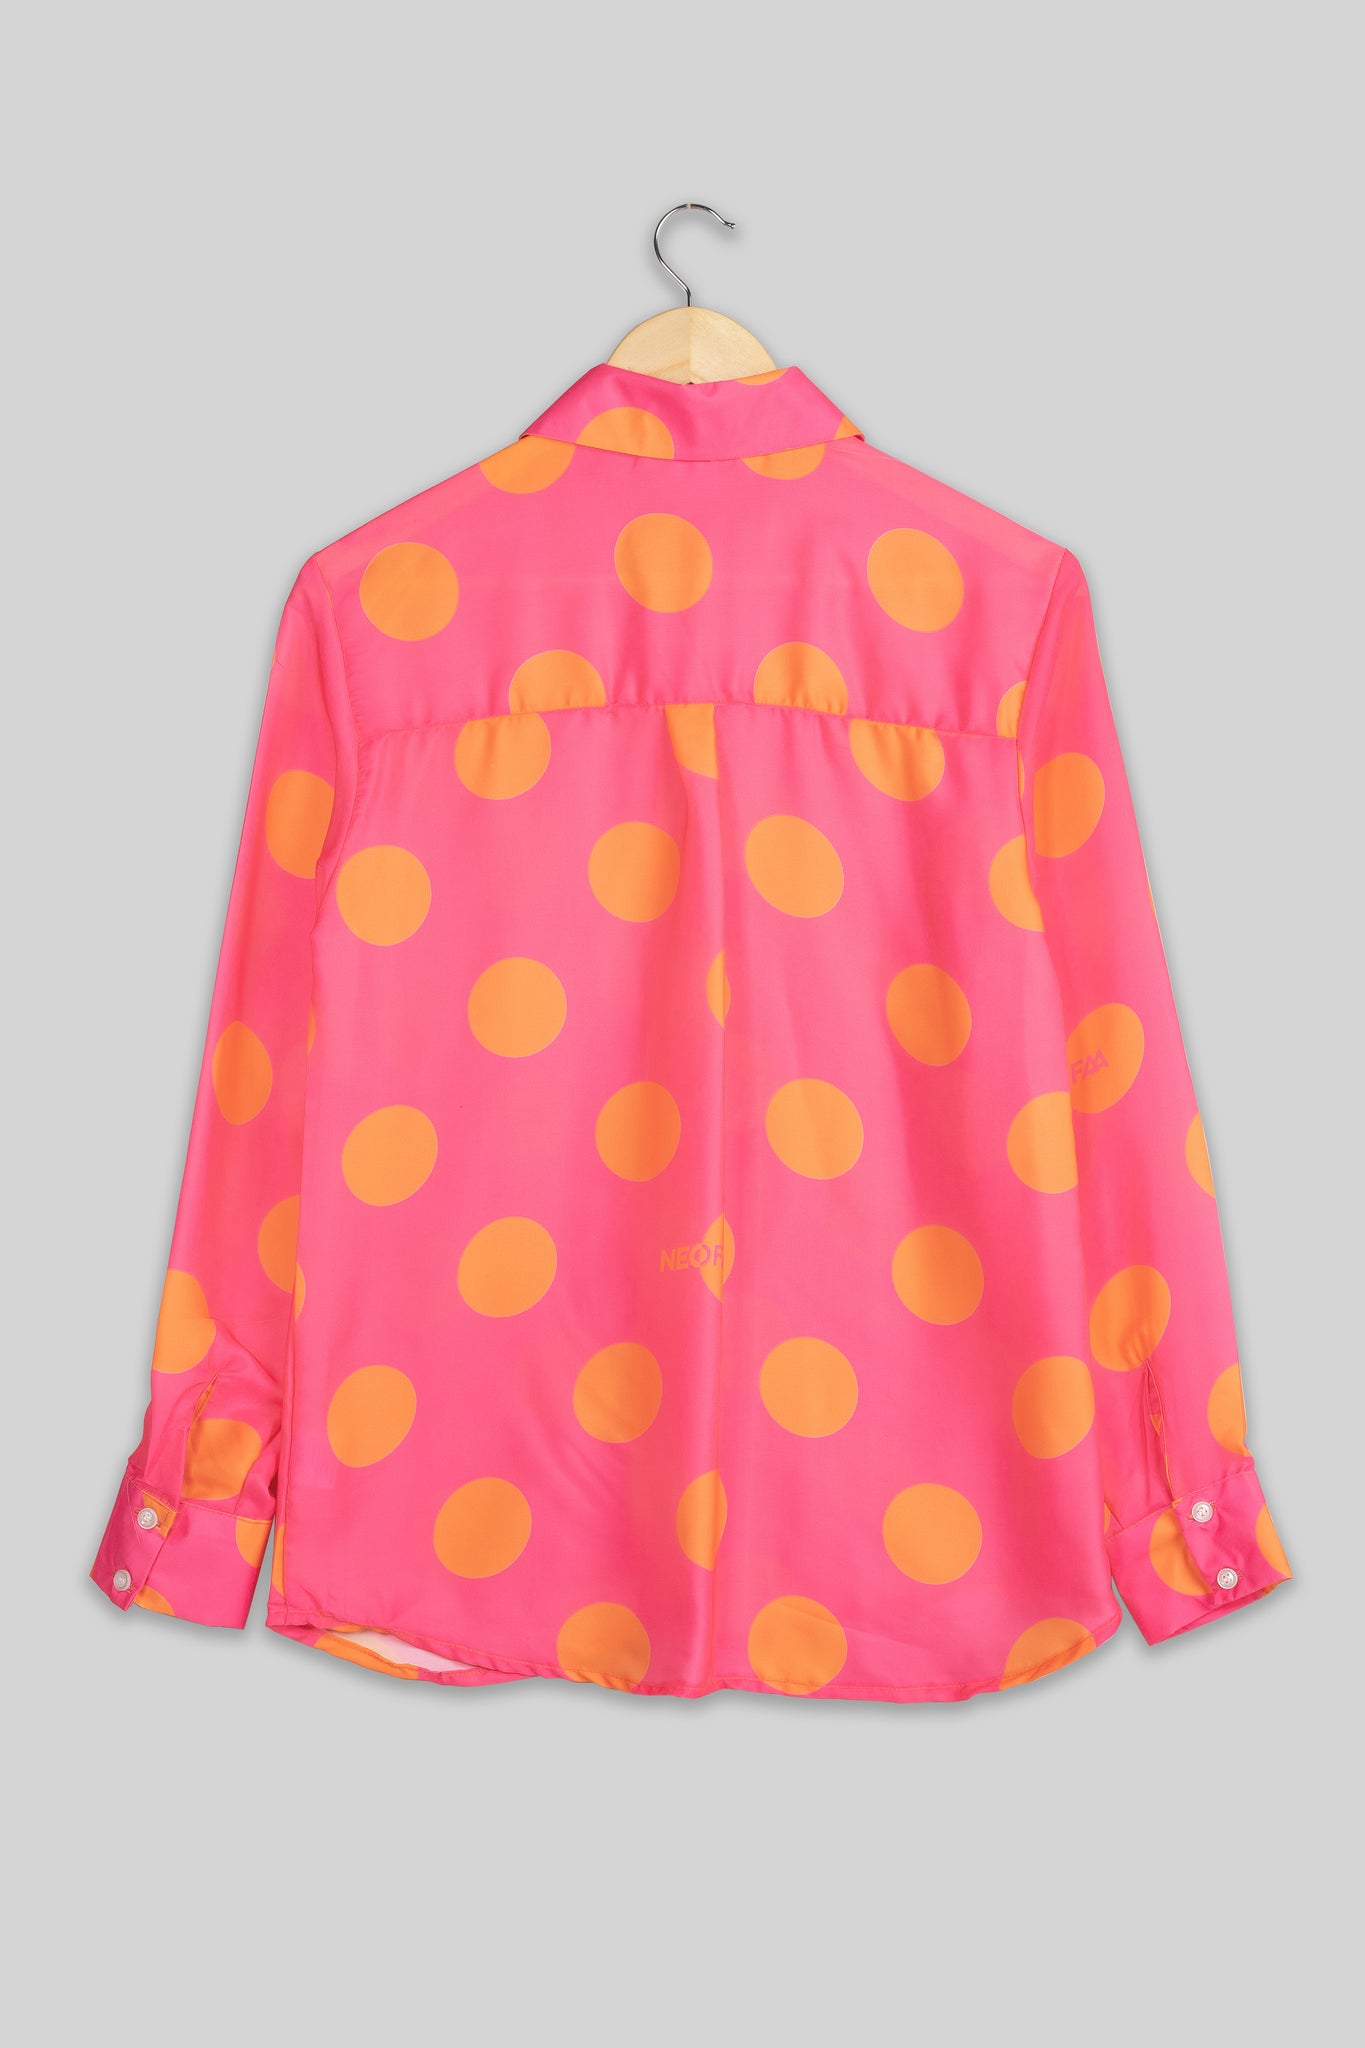 Polka Dots Shirt For Women